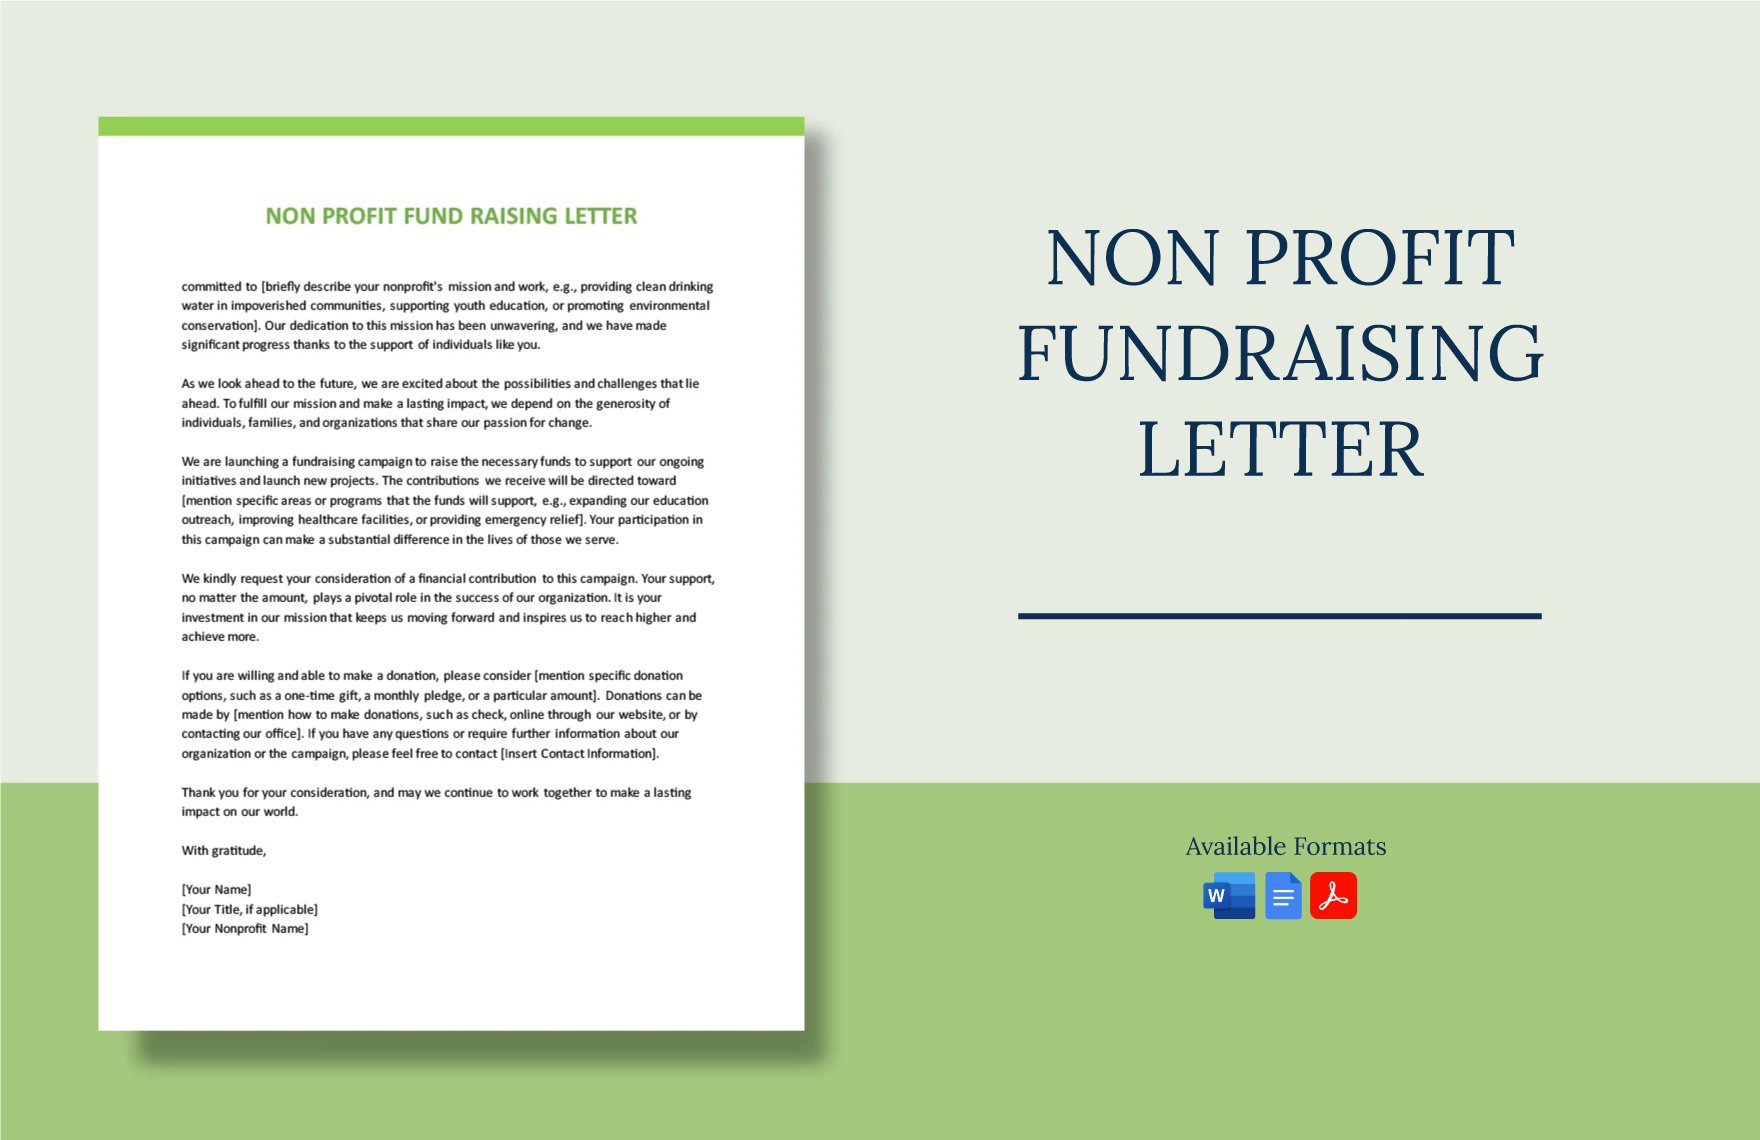 Non Profit Fundraising Letter in Word, Google Docs, PDF